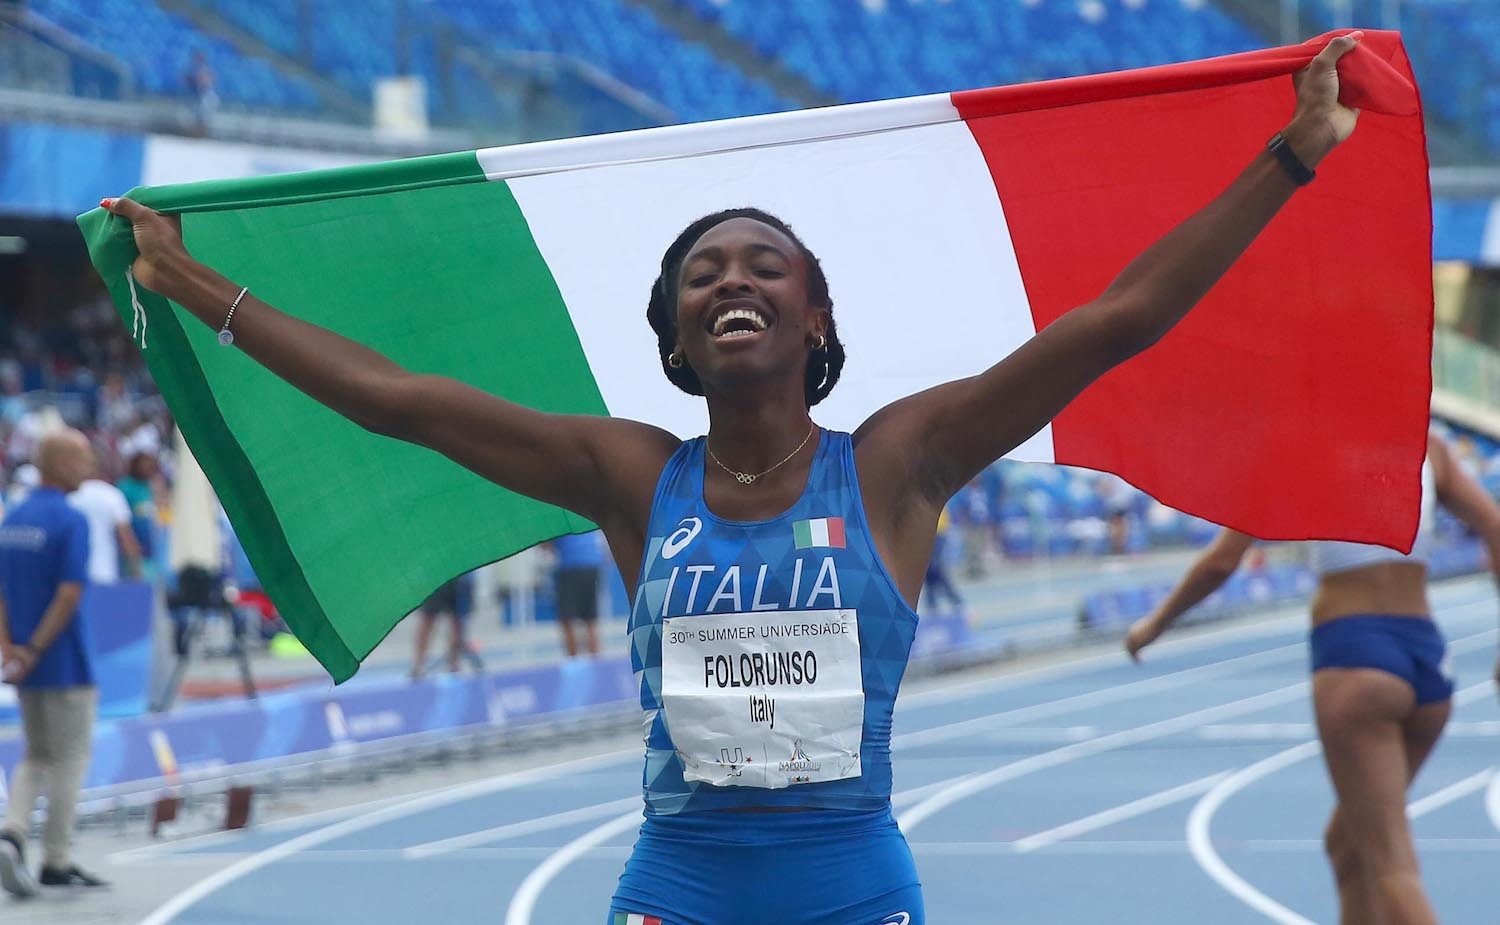 Italy's Ayomide Folorunso retained her women's 400m hurdles title ©FISU